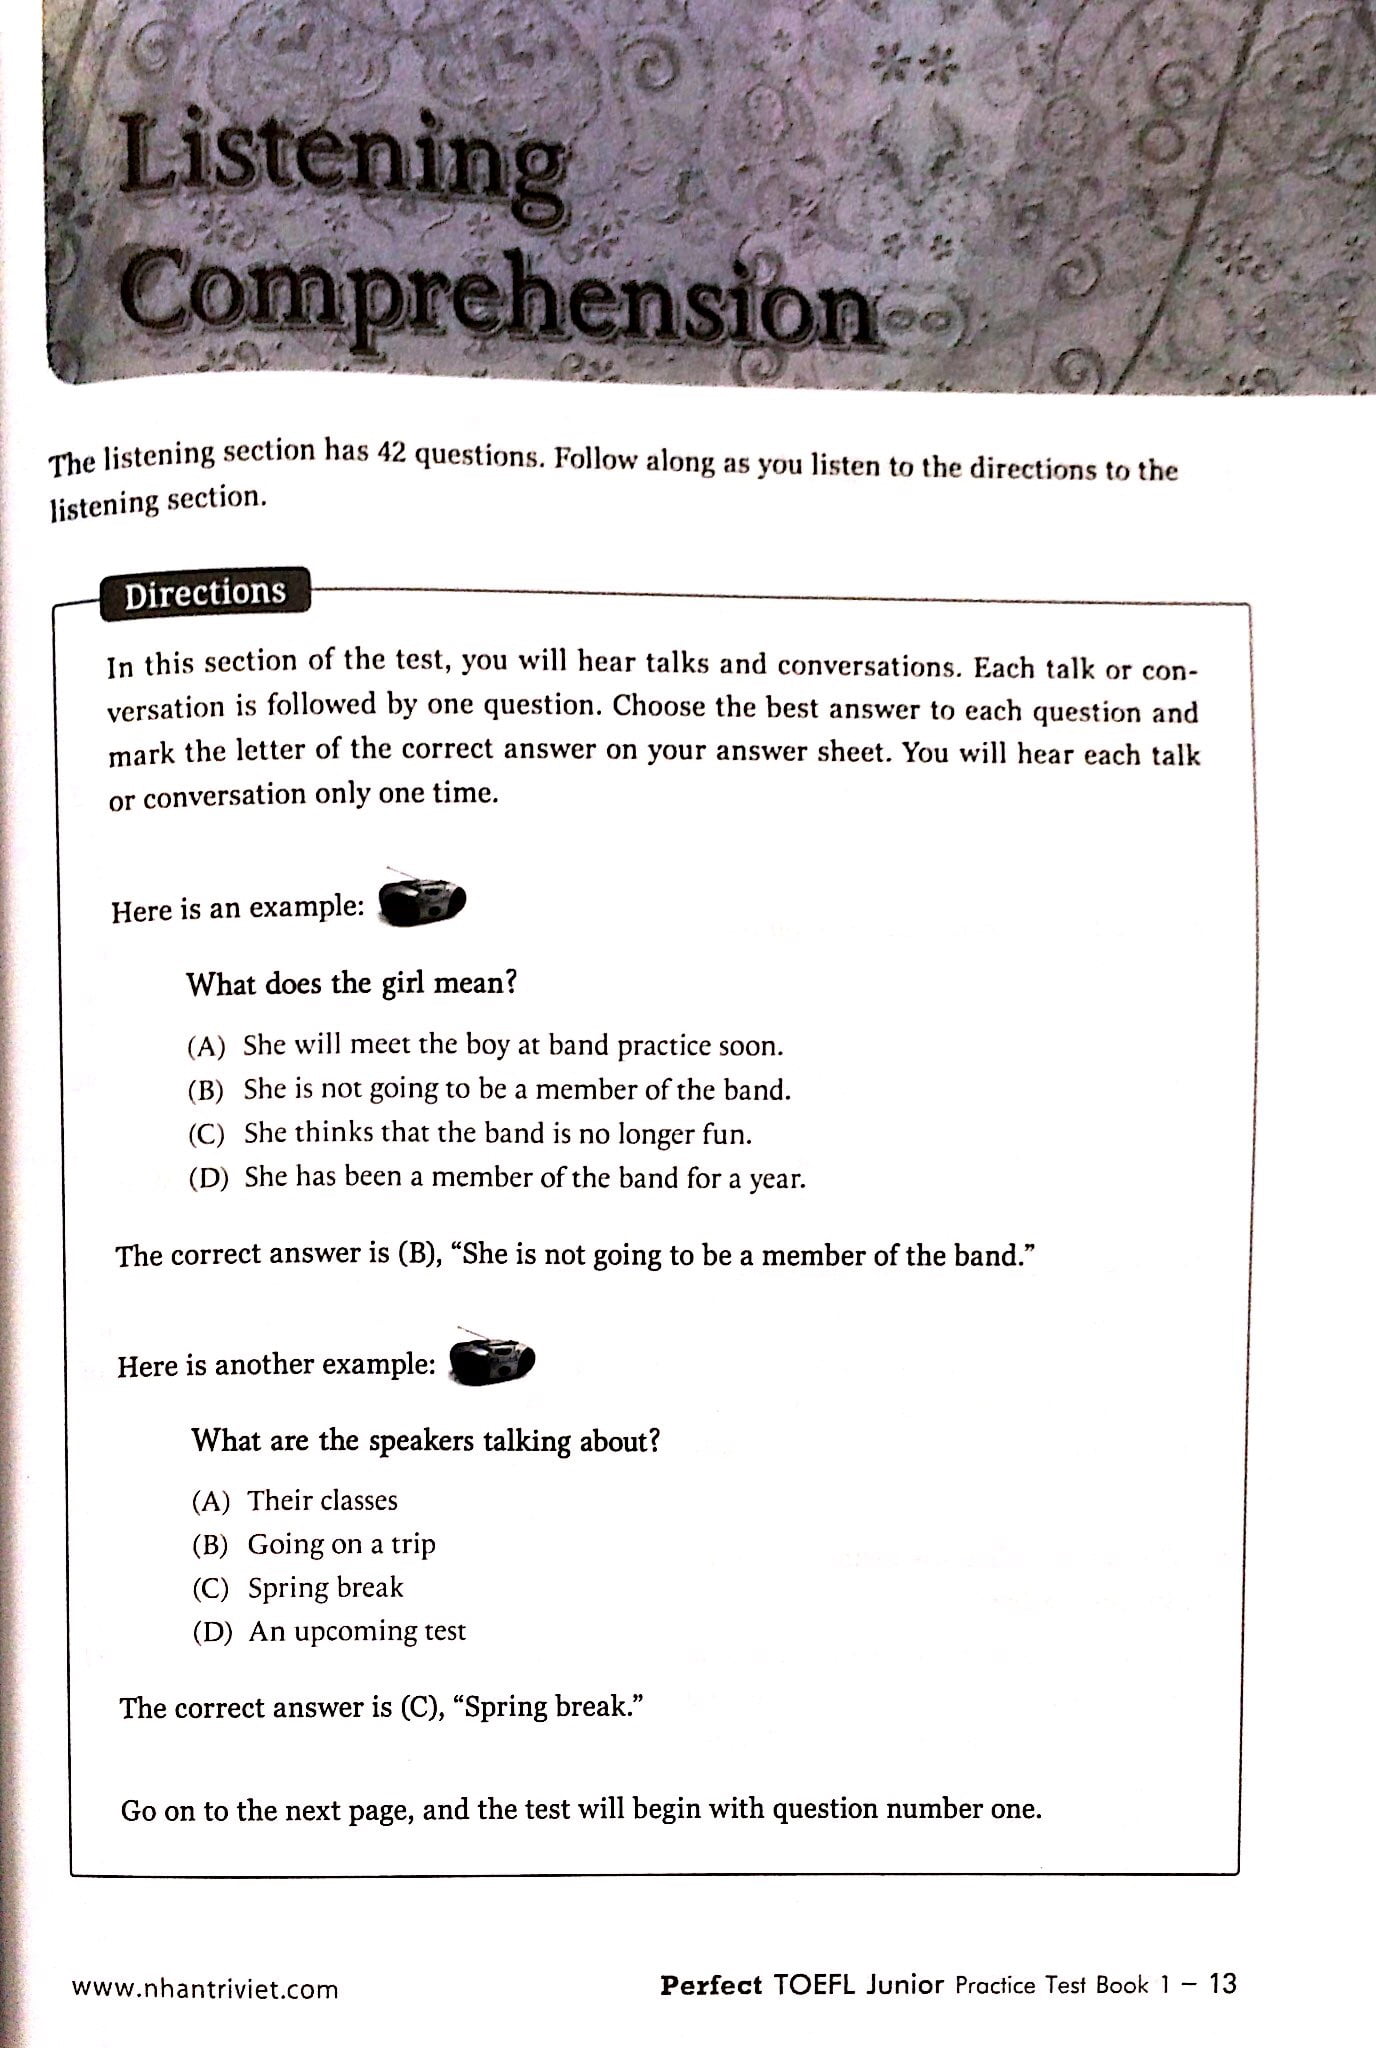 Perfect TOEFL Junior_Practice Test_Book 1 CD PDF